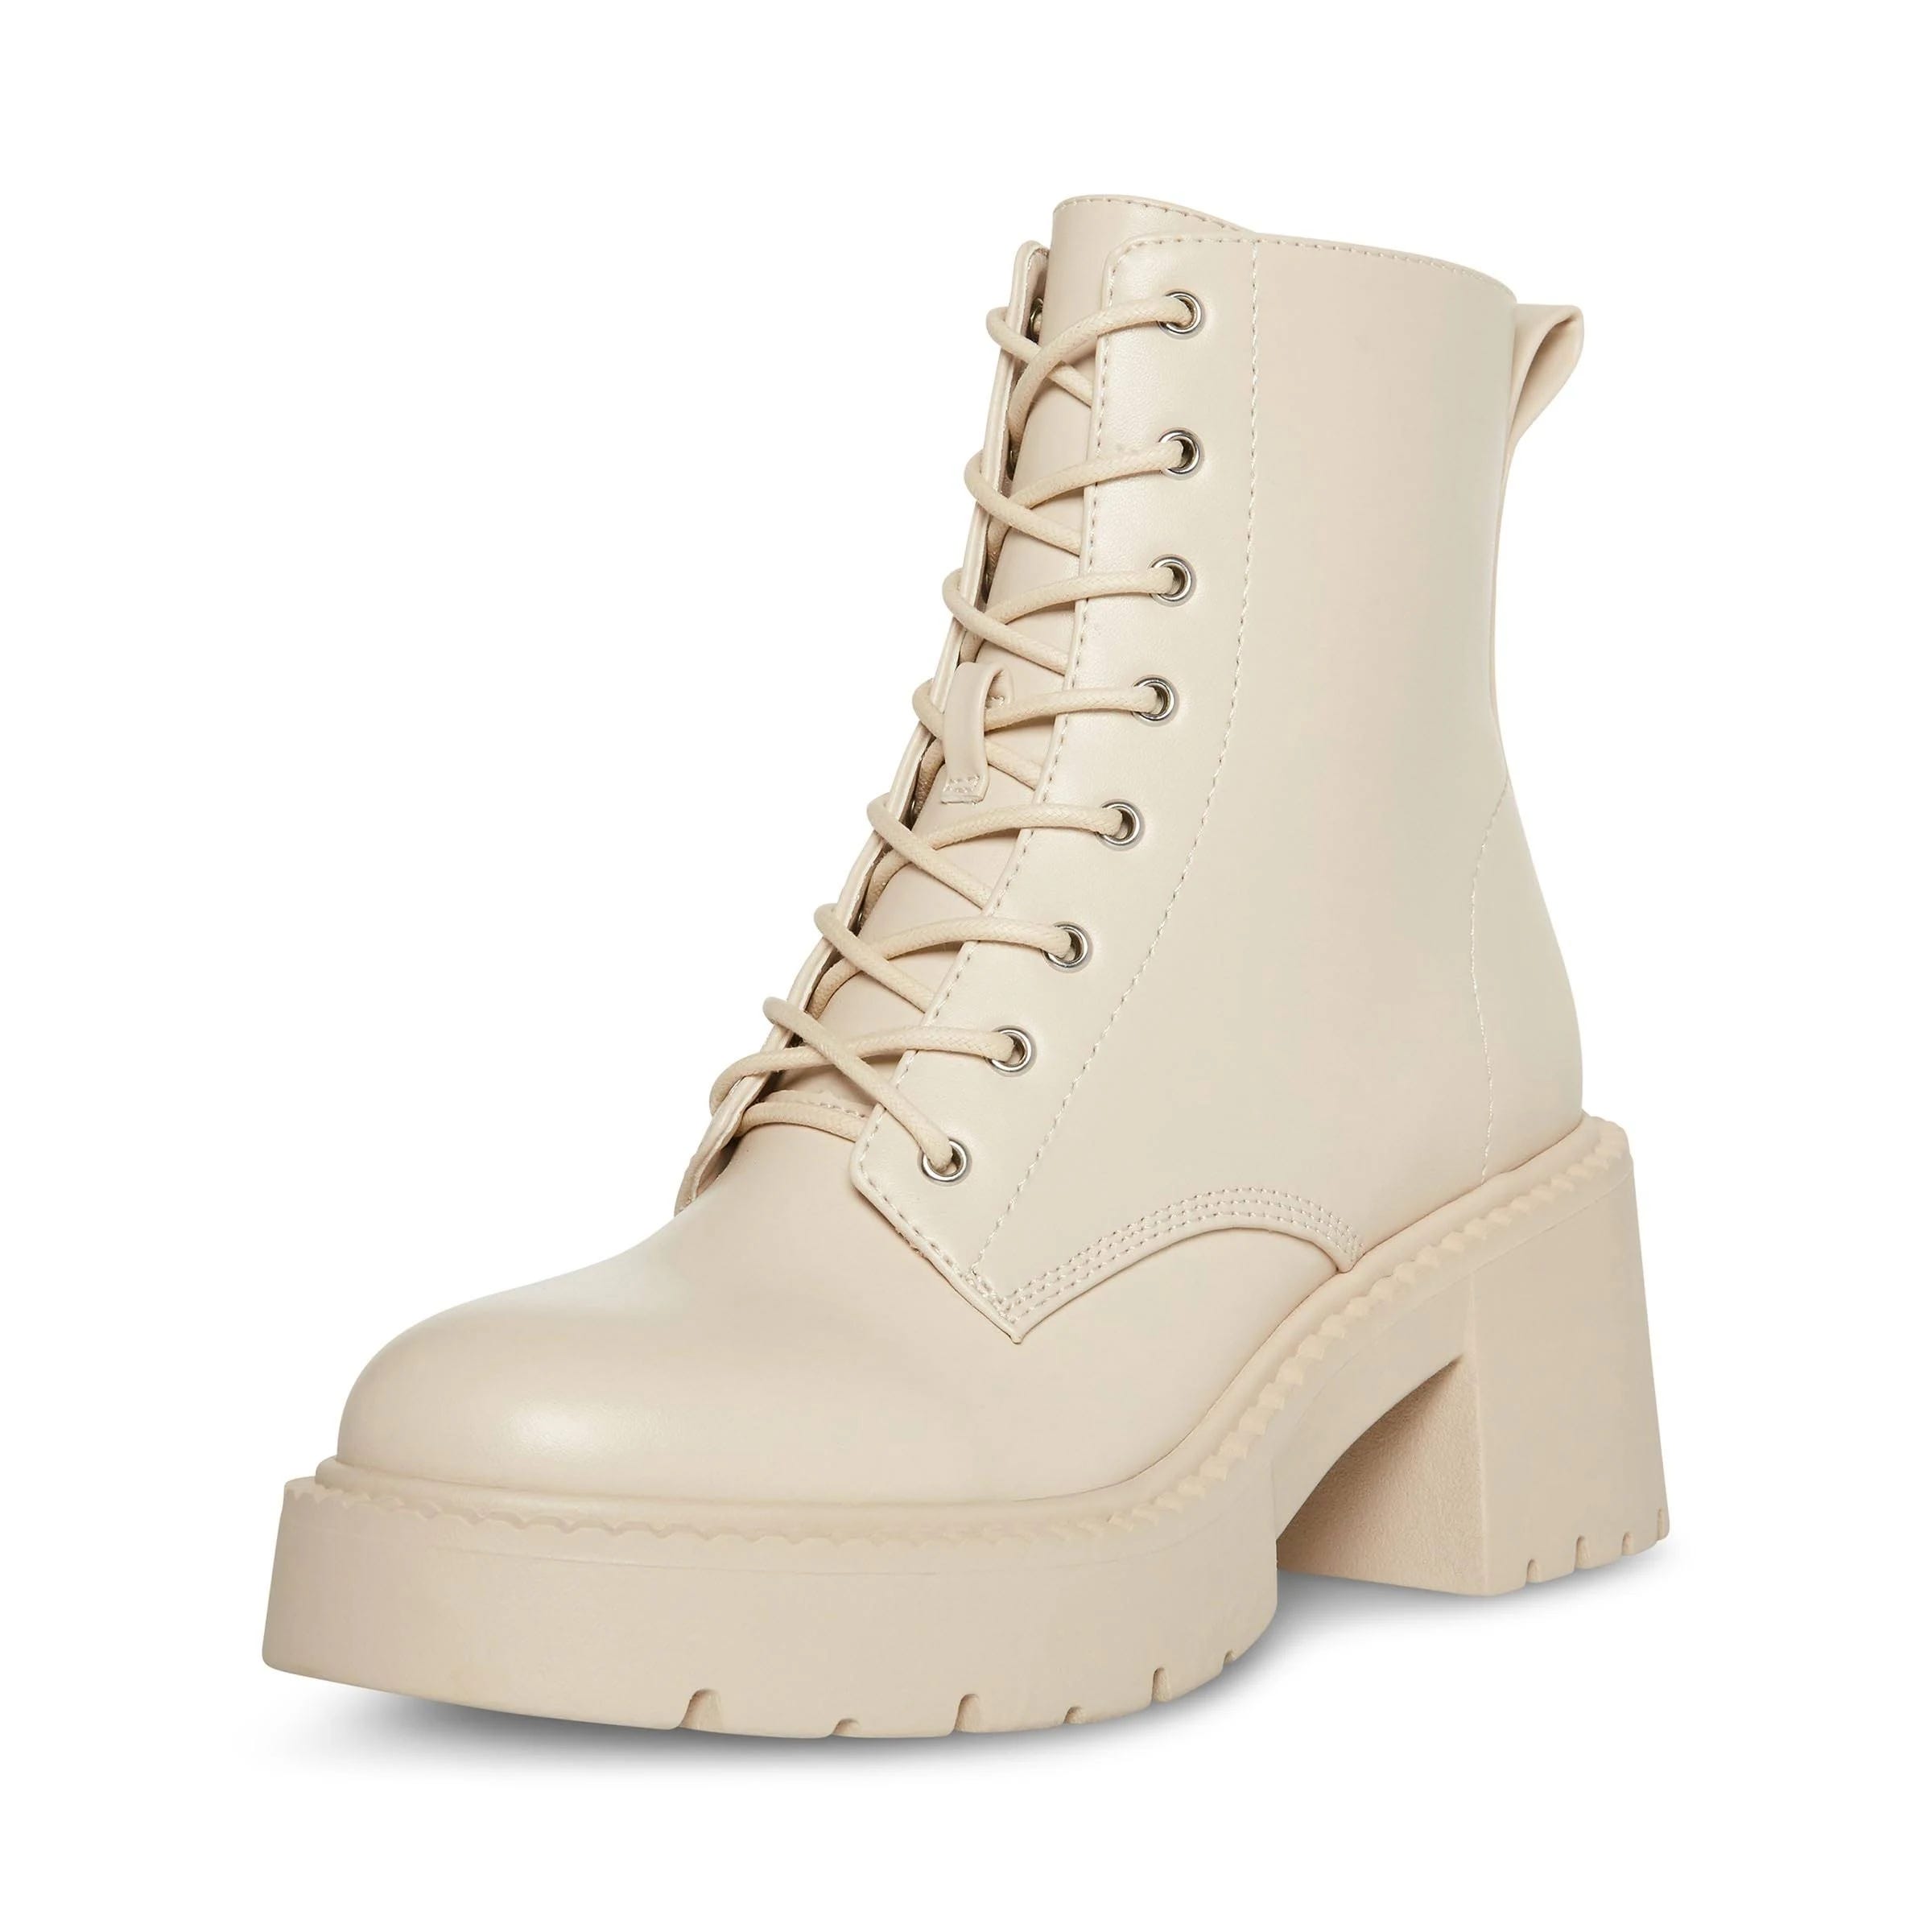 Fashionable White Platform Combat Boots for Women | Image